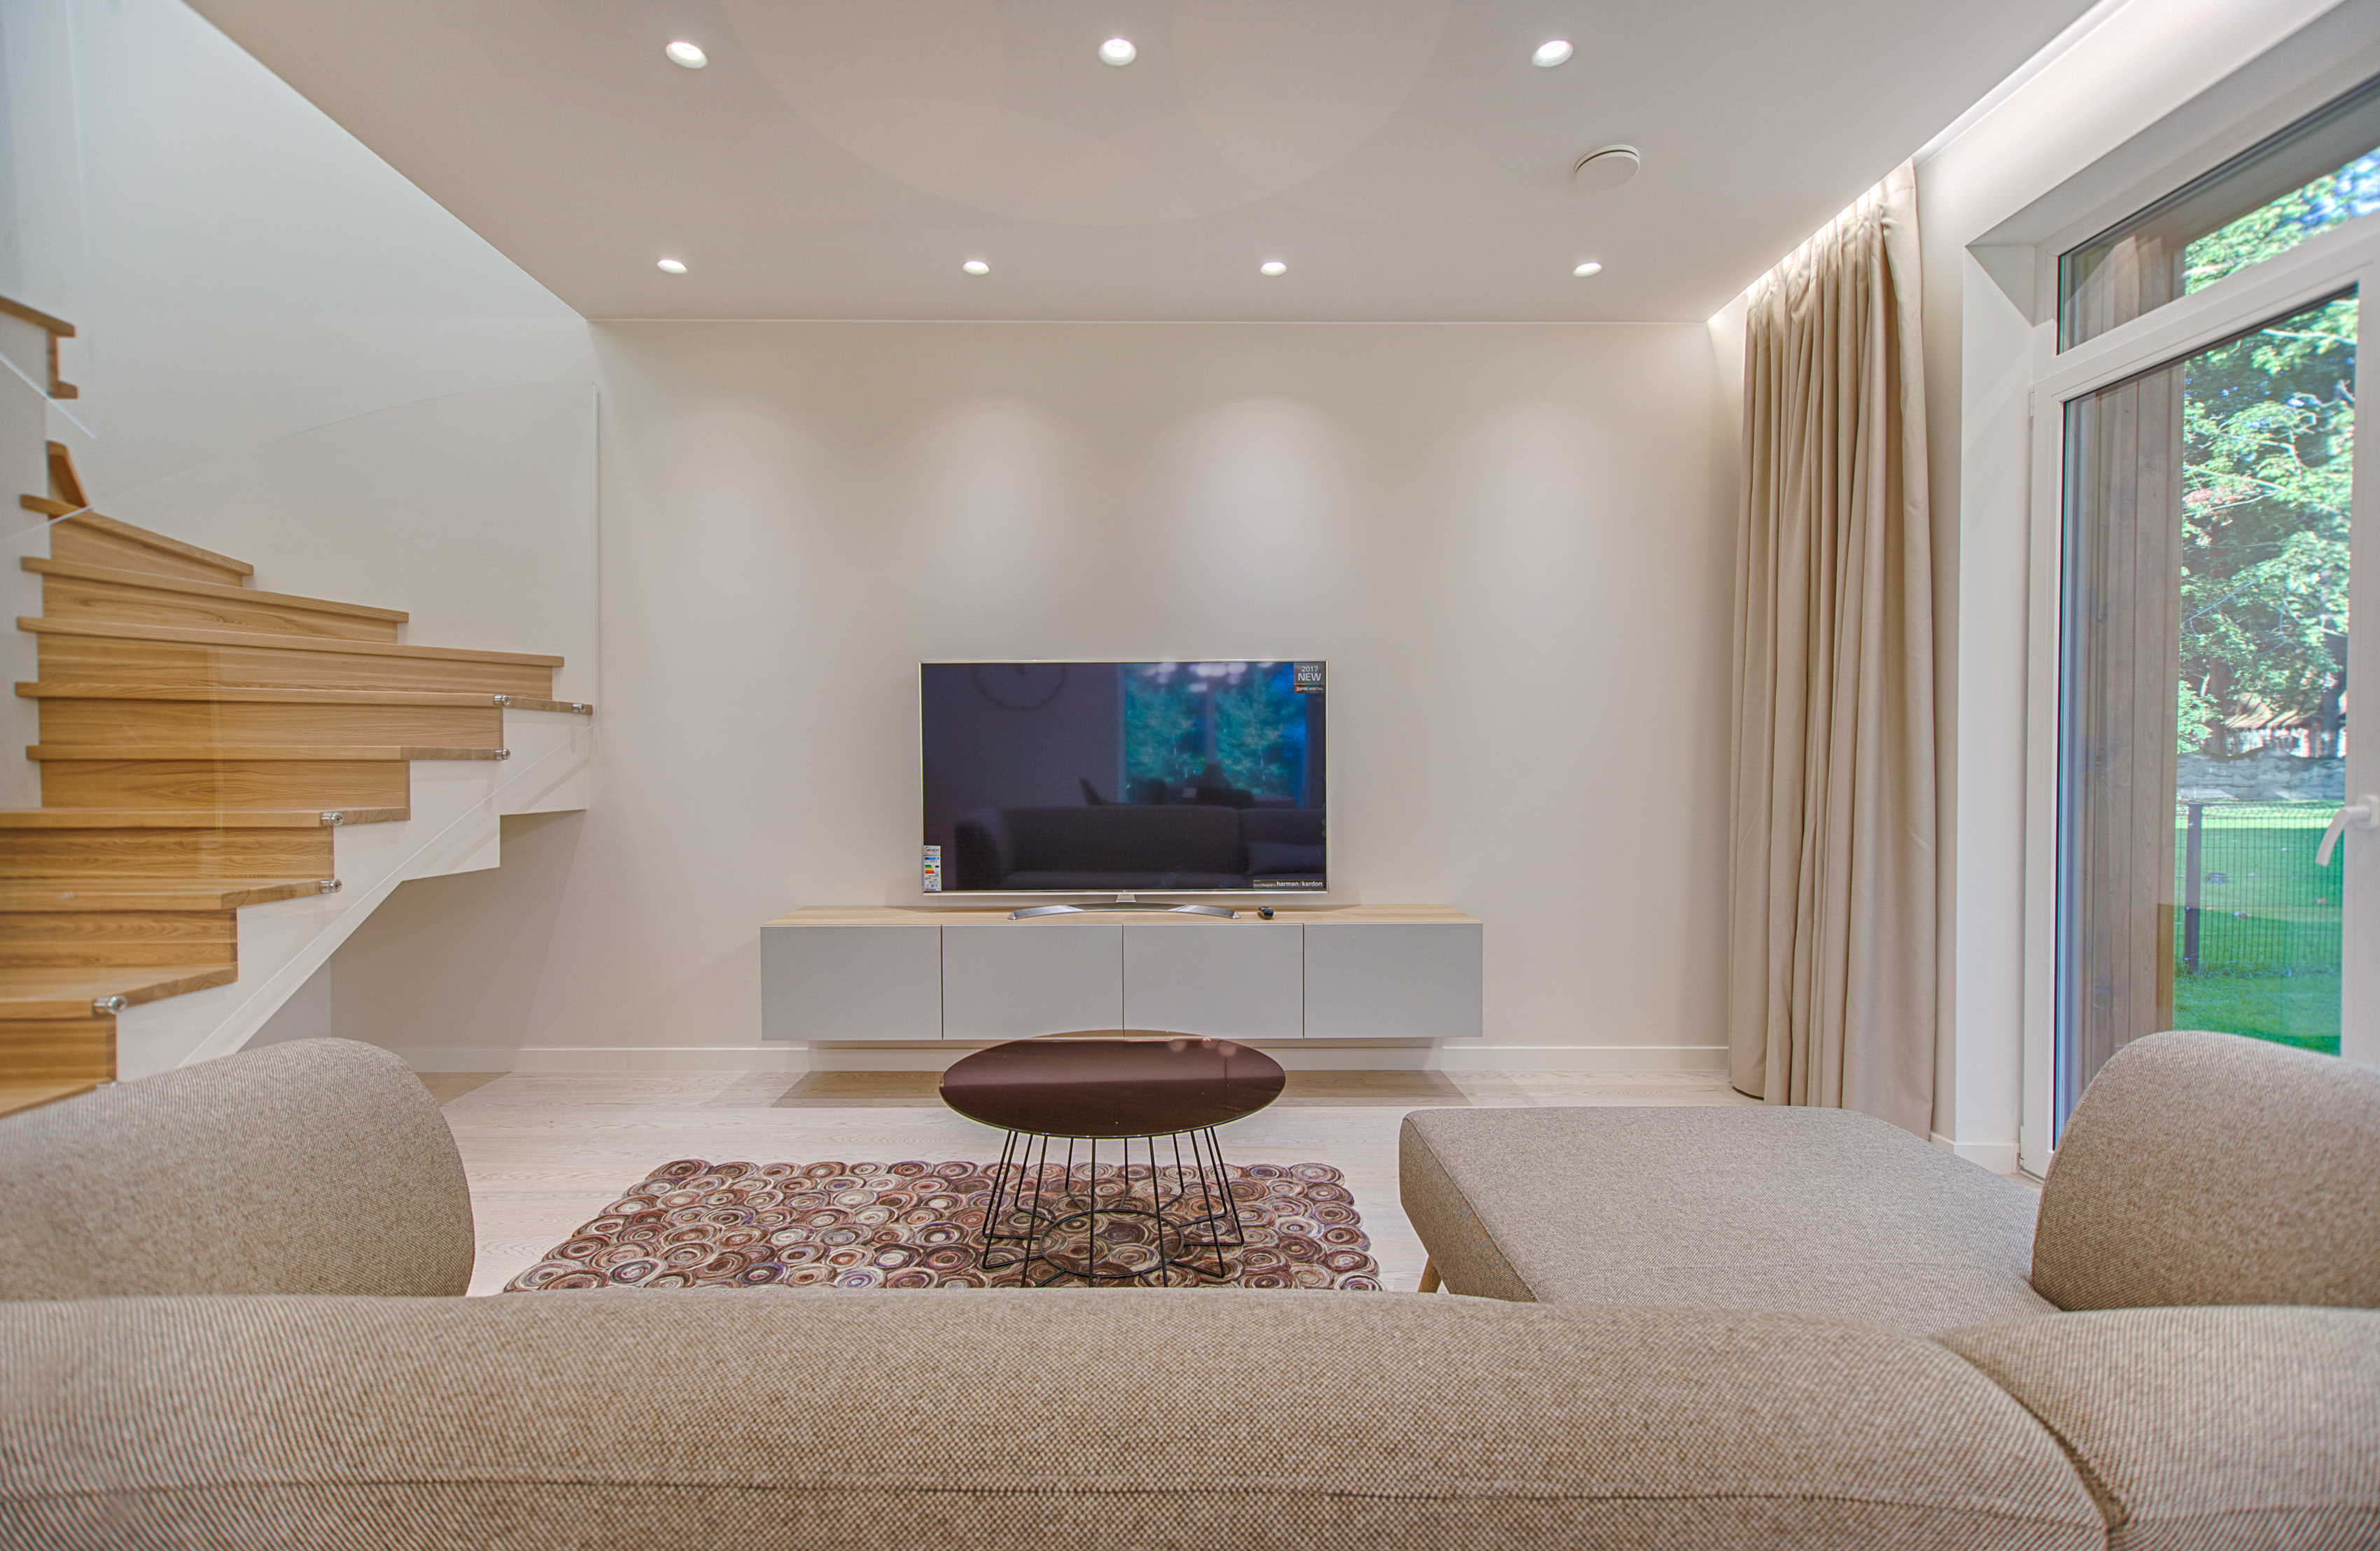 high quality living room furniture